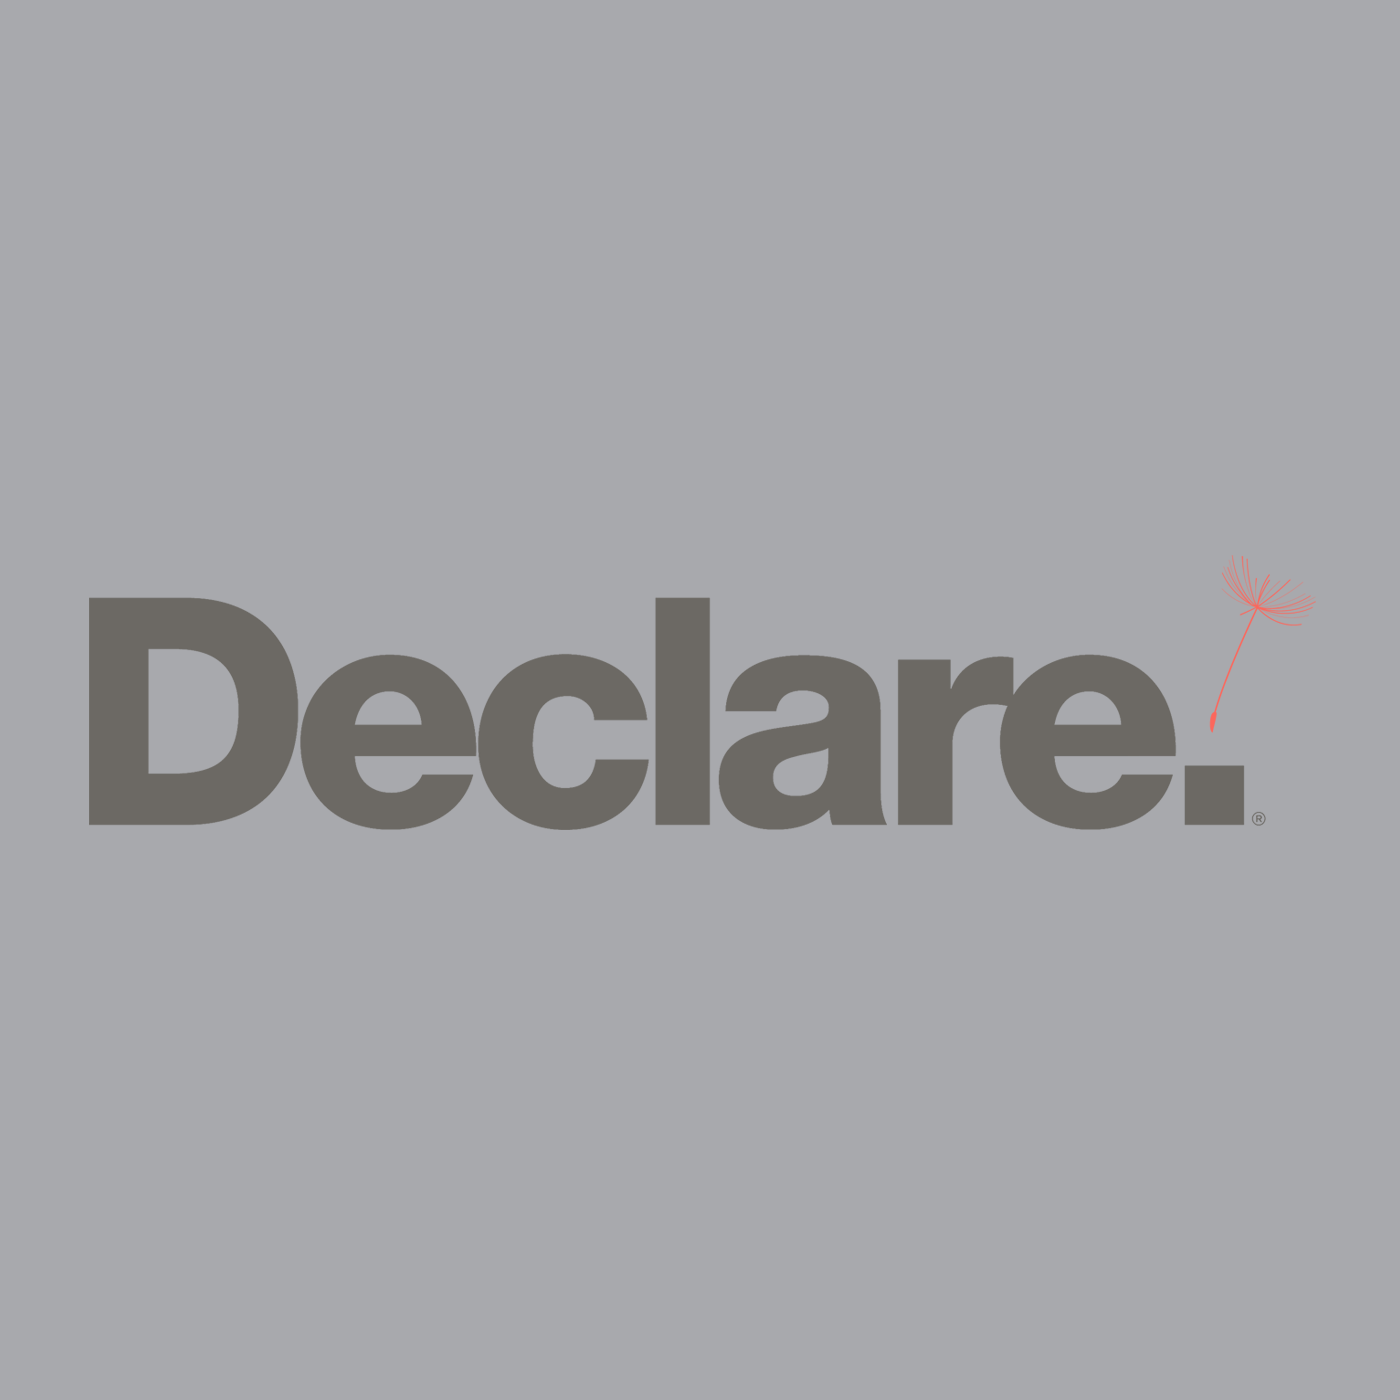 Declare  - Product Label Announcement 